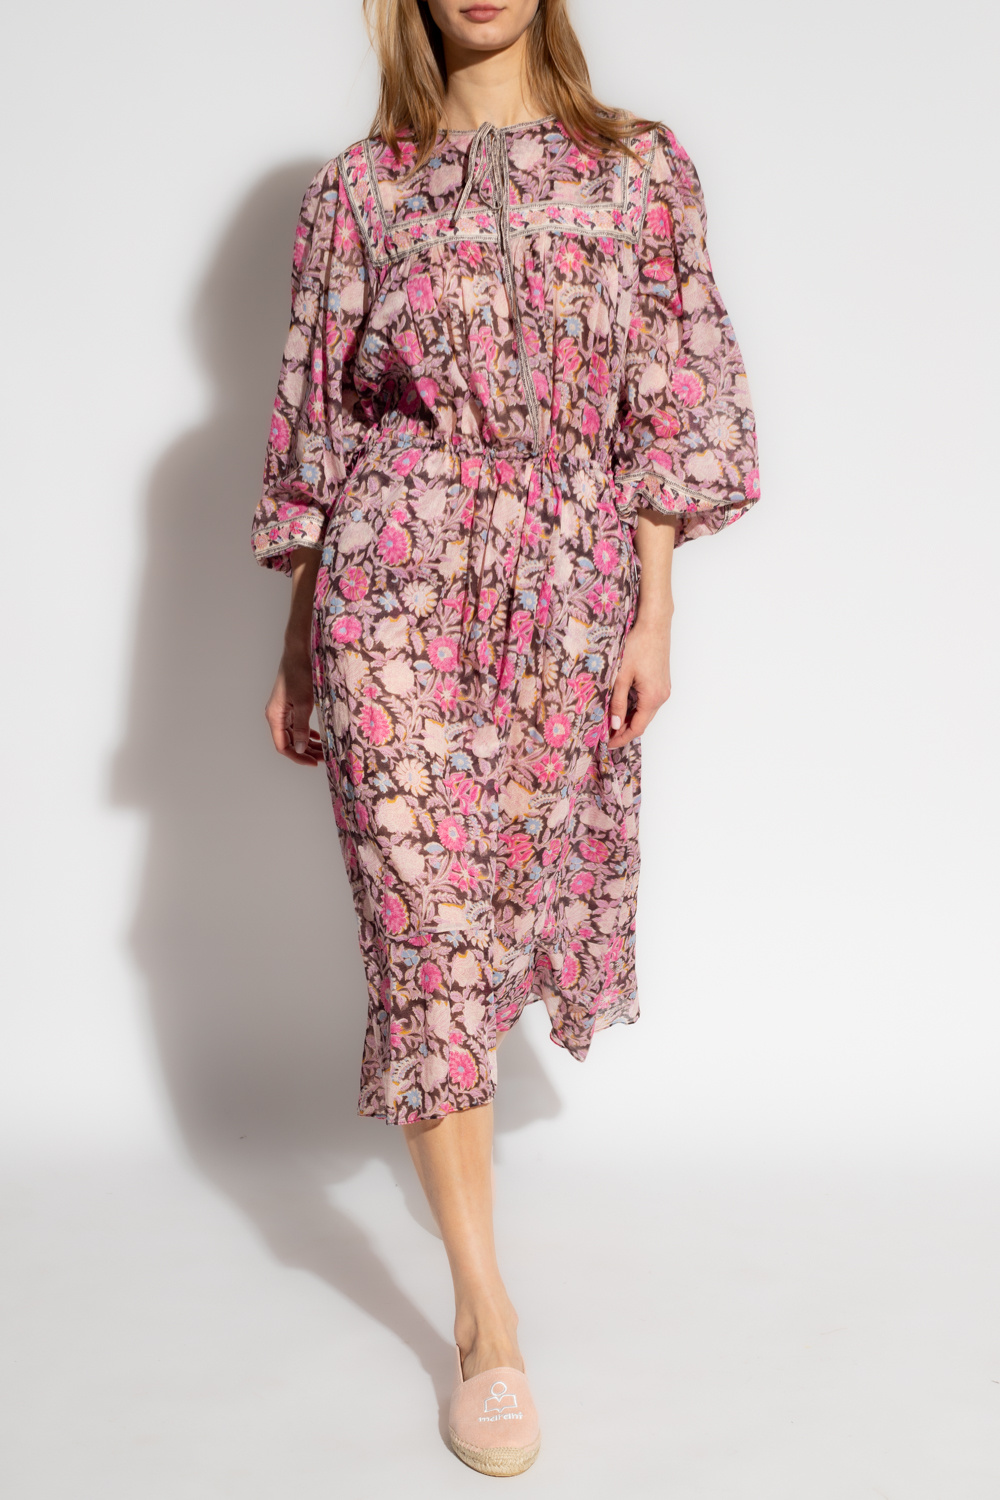 Marant Etoile ‘Greila’ Mascu dress with floral motif